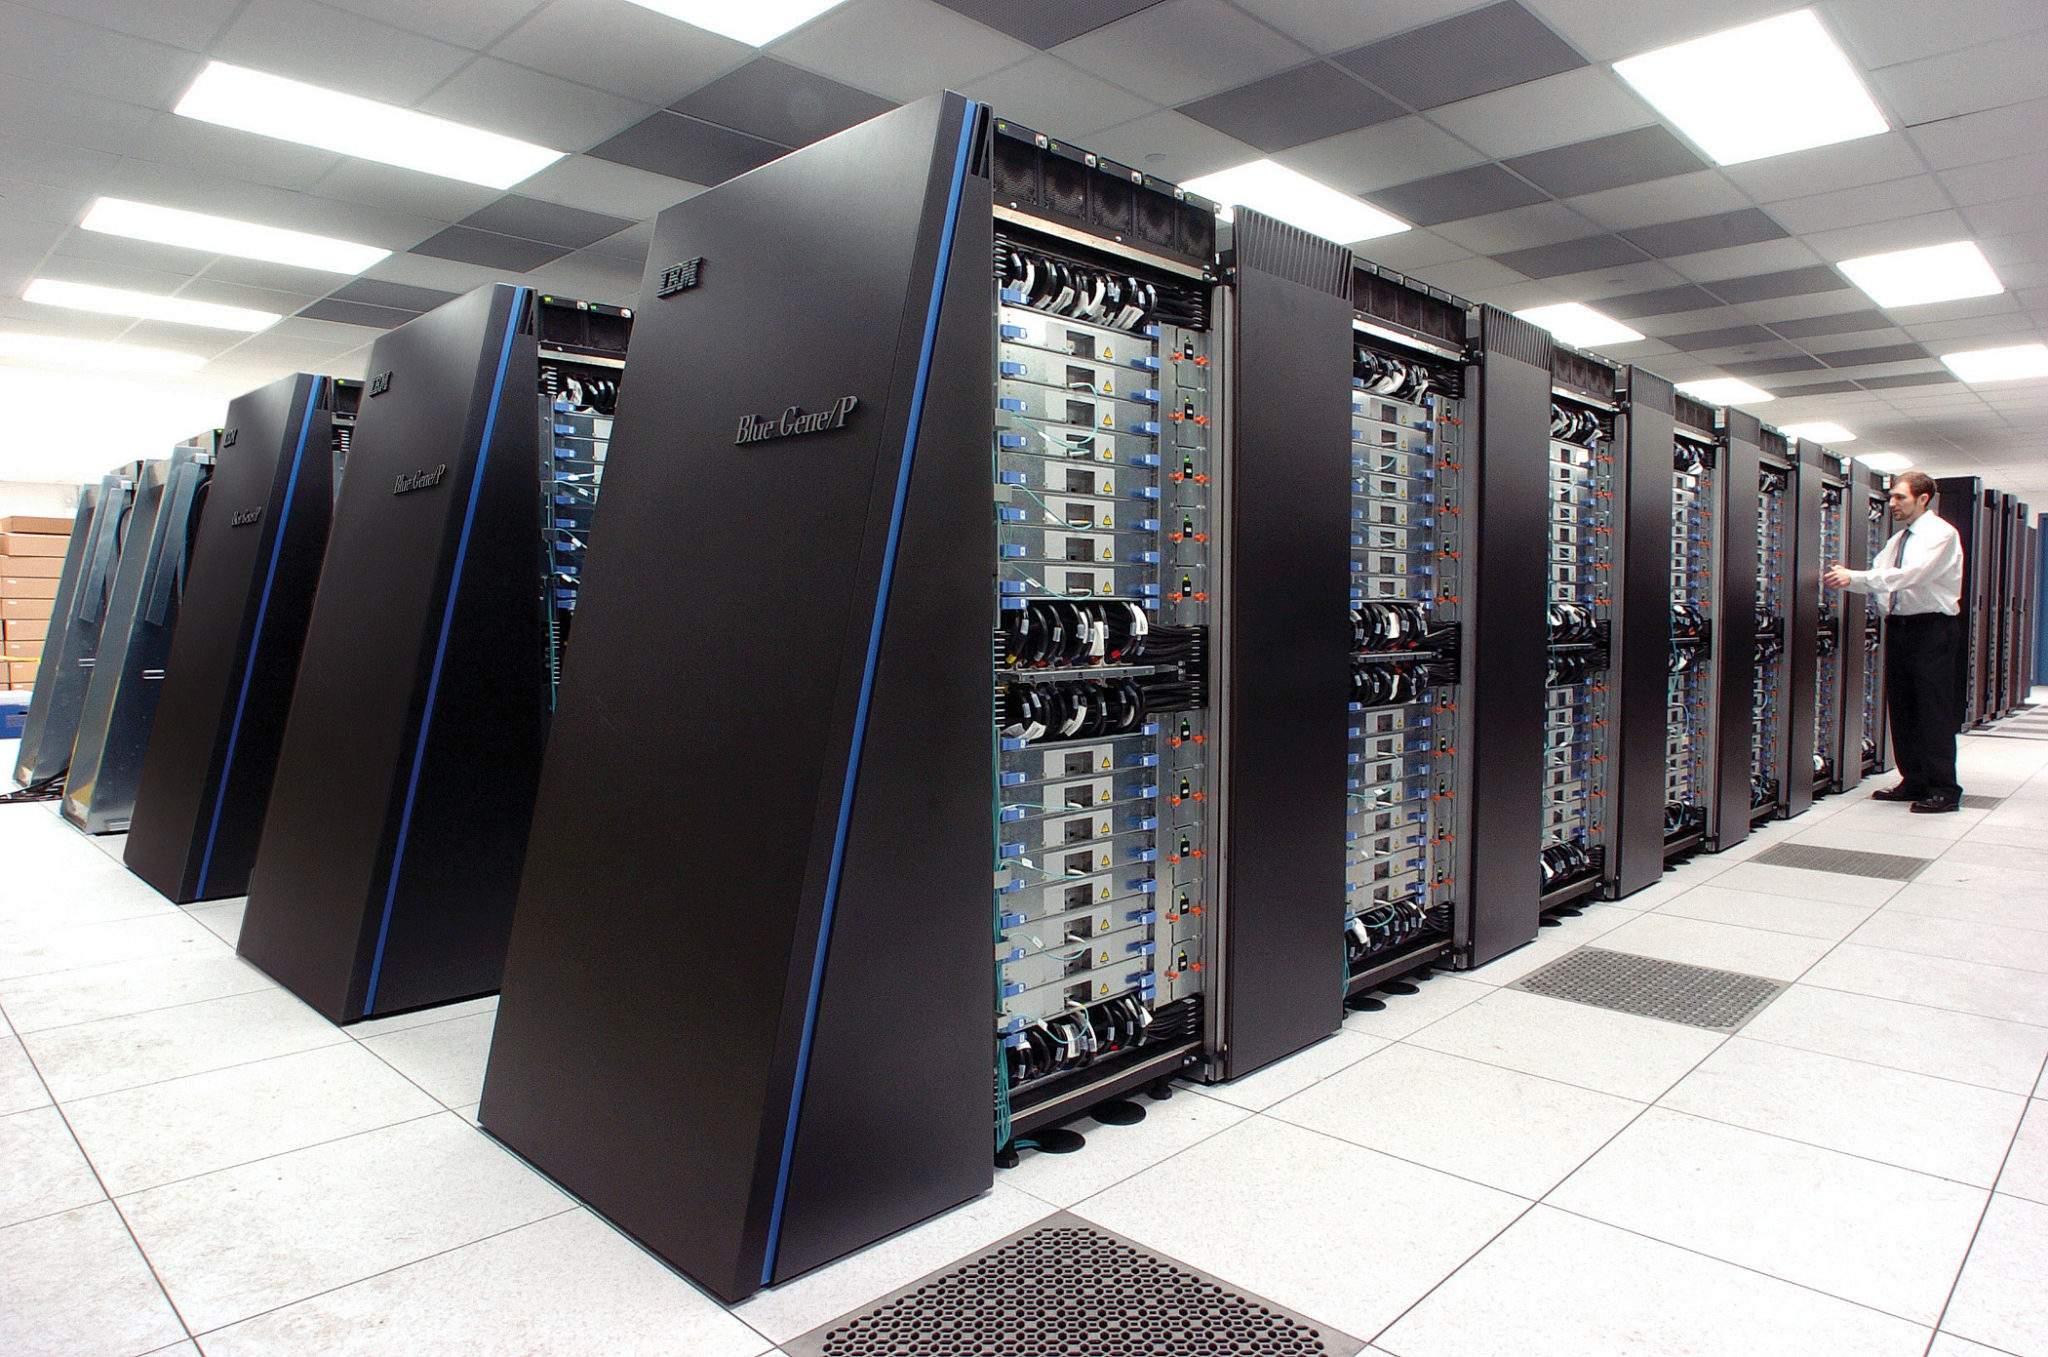 http://www.sciencemediacentre.co.nz/wp-content/upload/2011/06/IBM_Blue_Gene_P_supercomputer.jpg